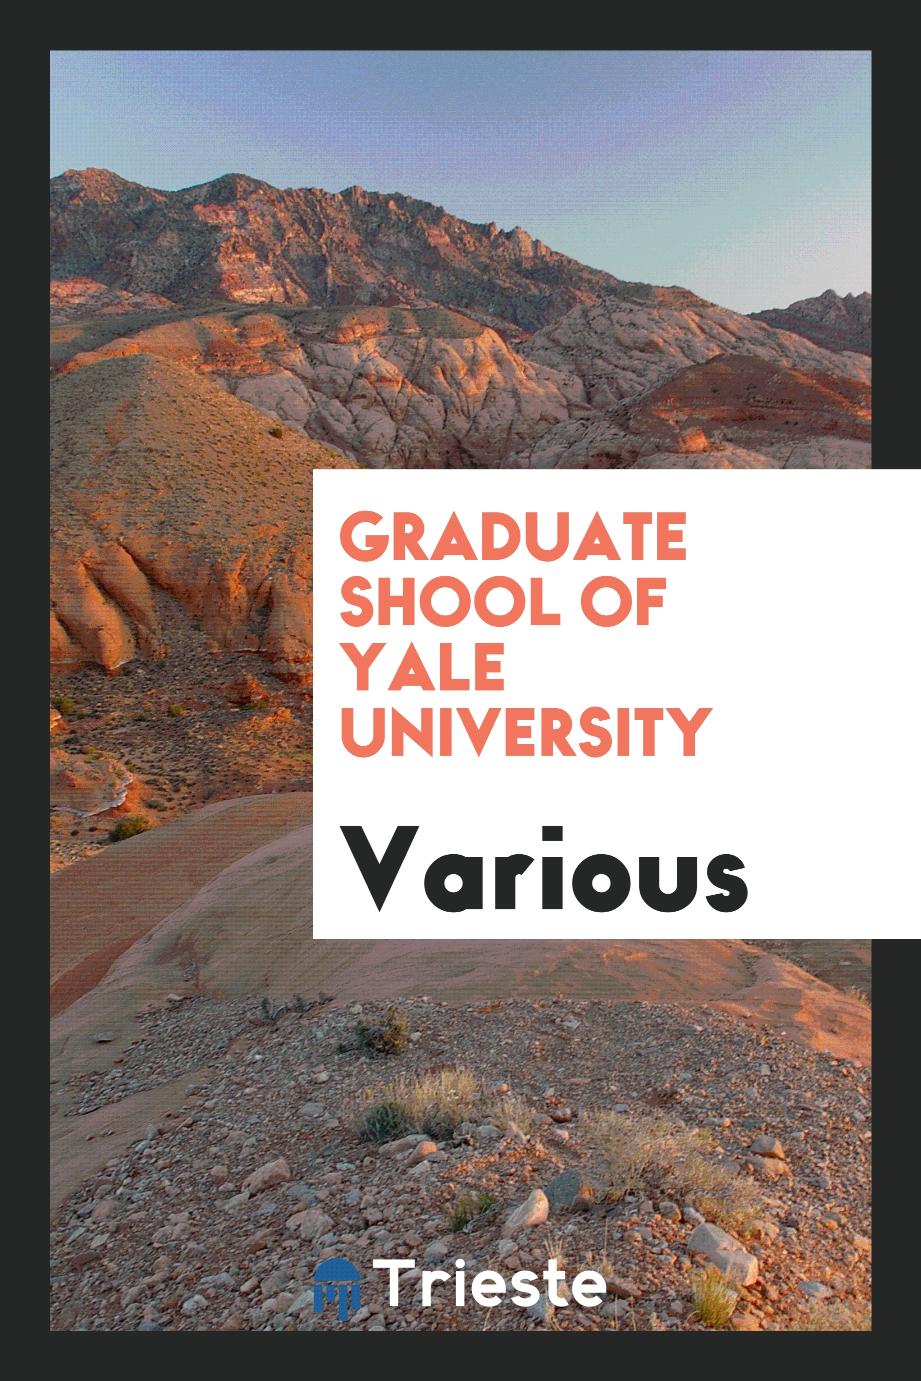 Graduate shool of Yale University